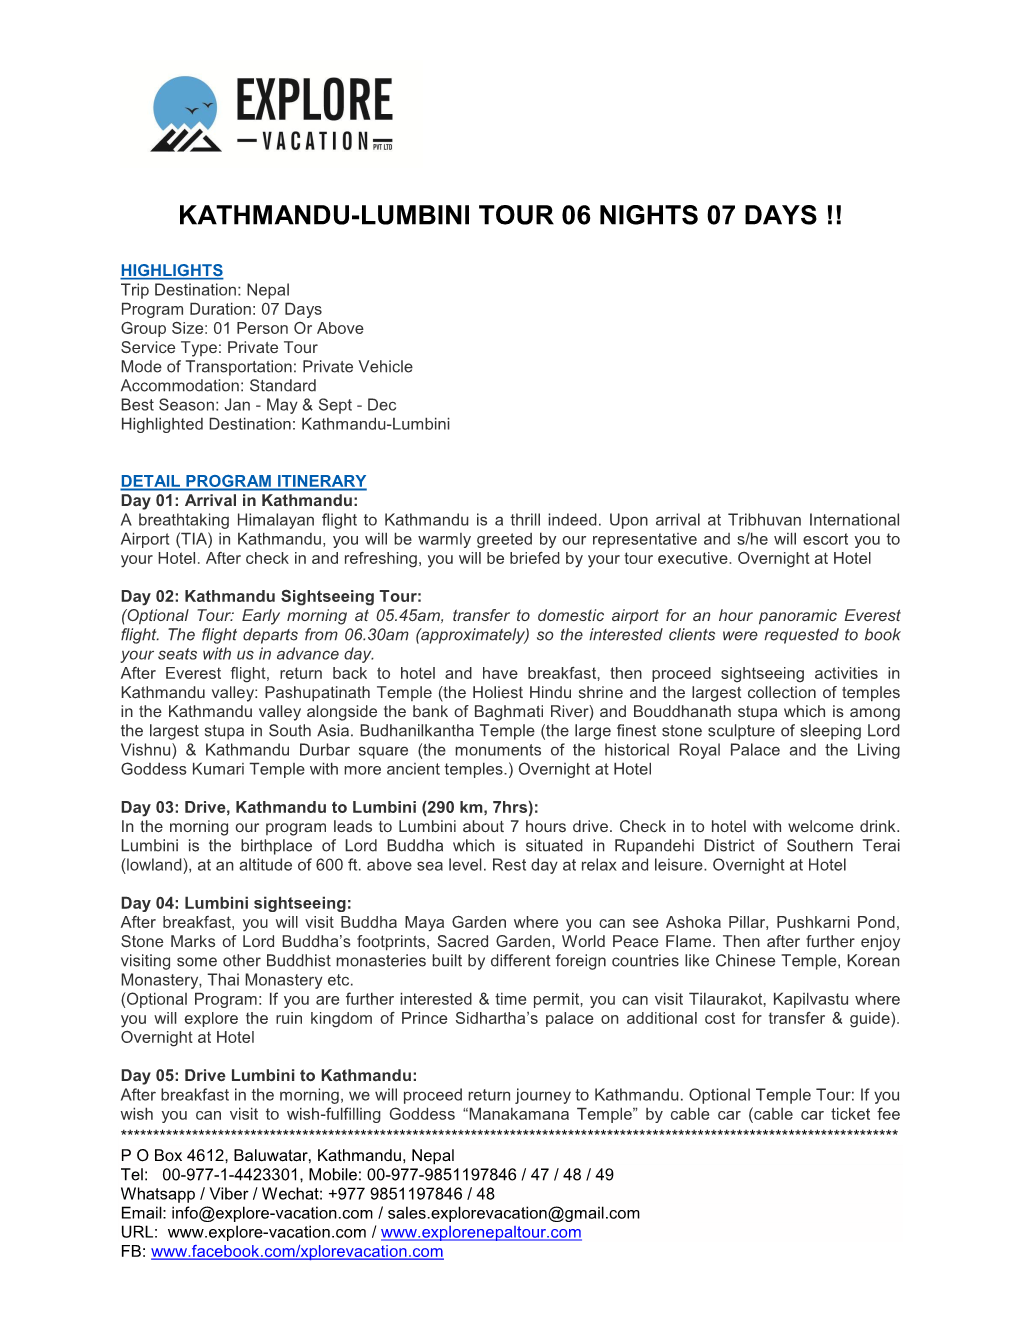 Kathmandu-Lumbini Tour 06 Nights 07 Days !!